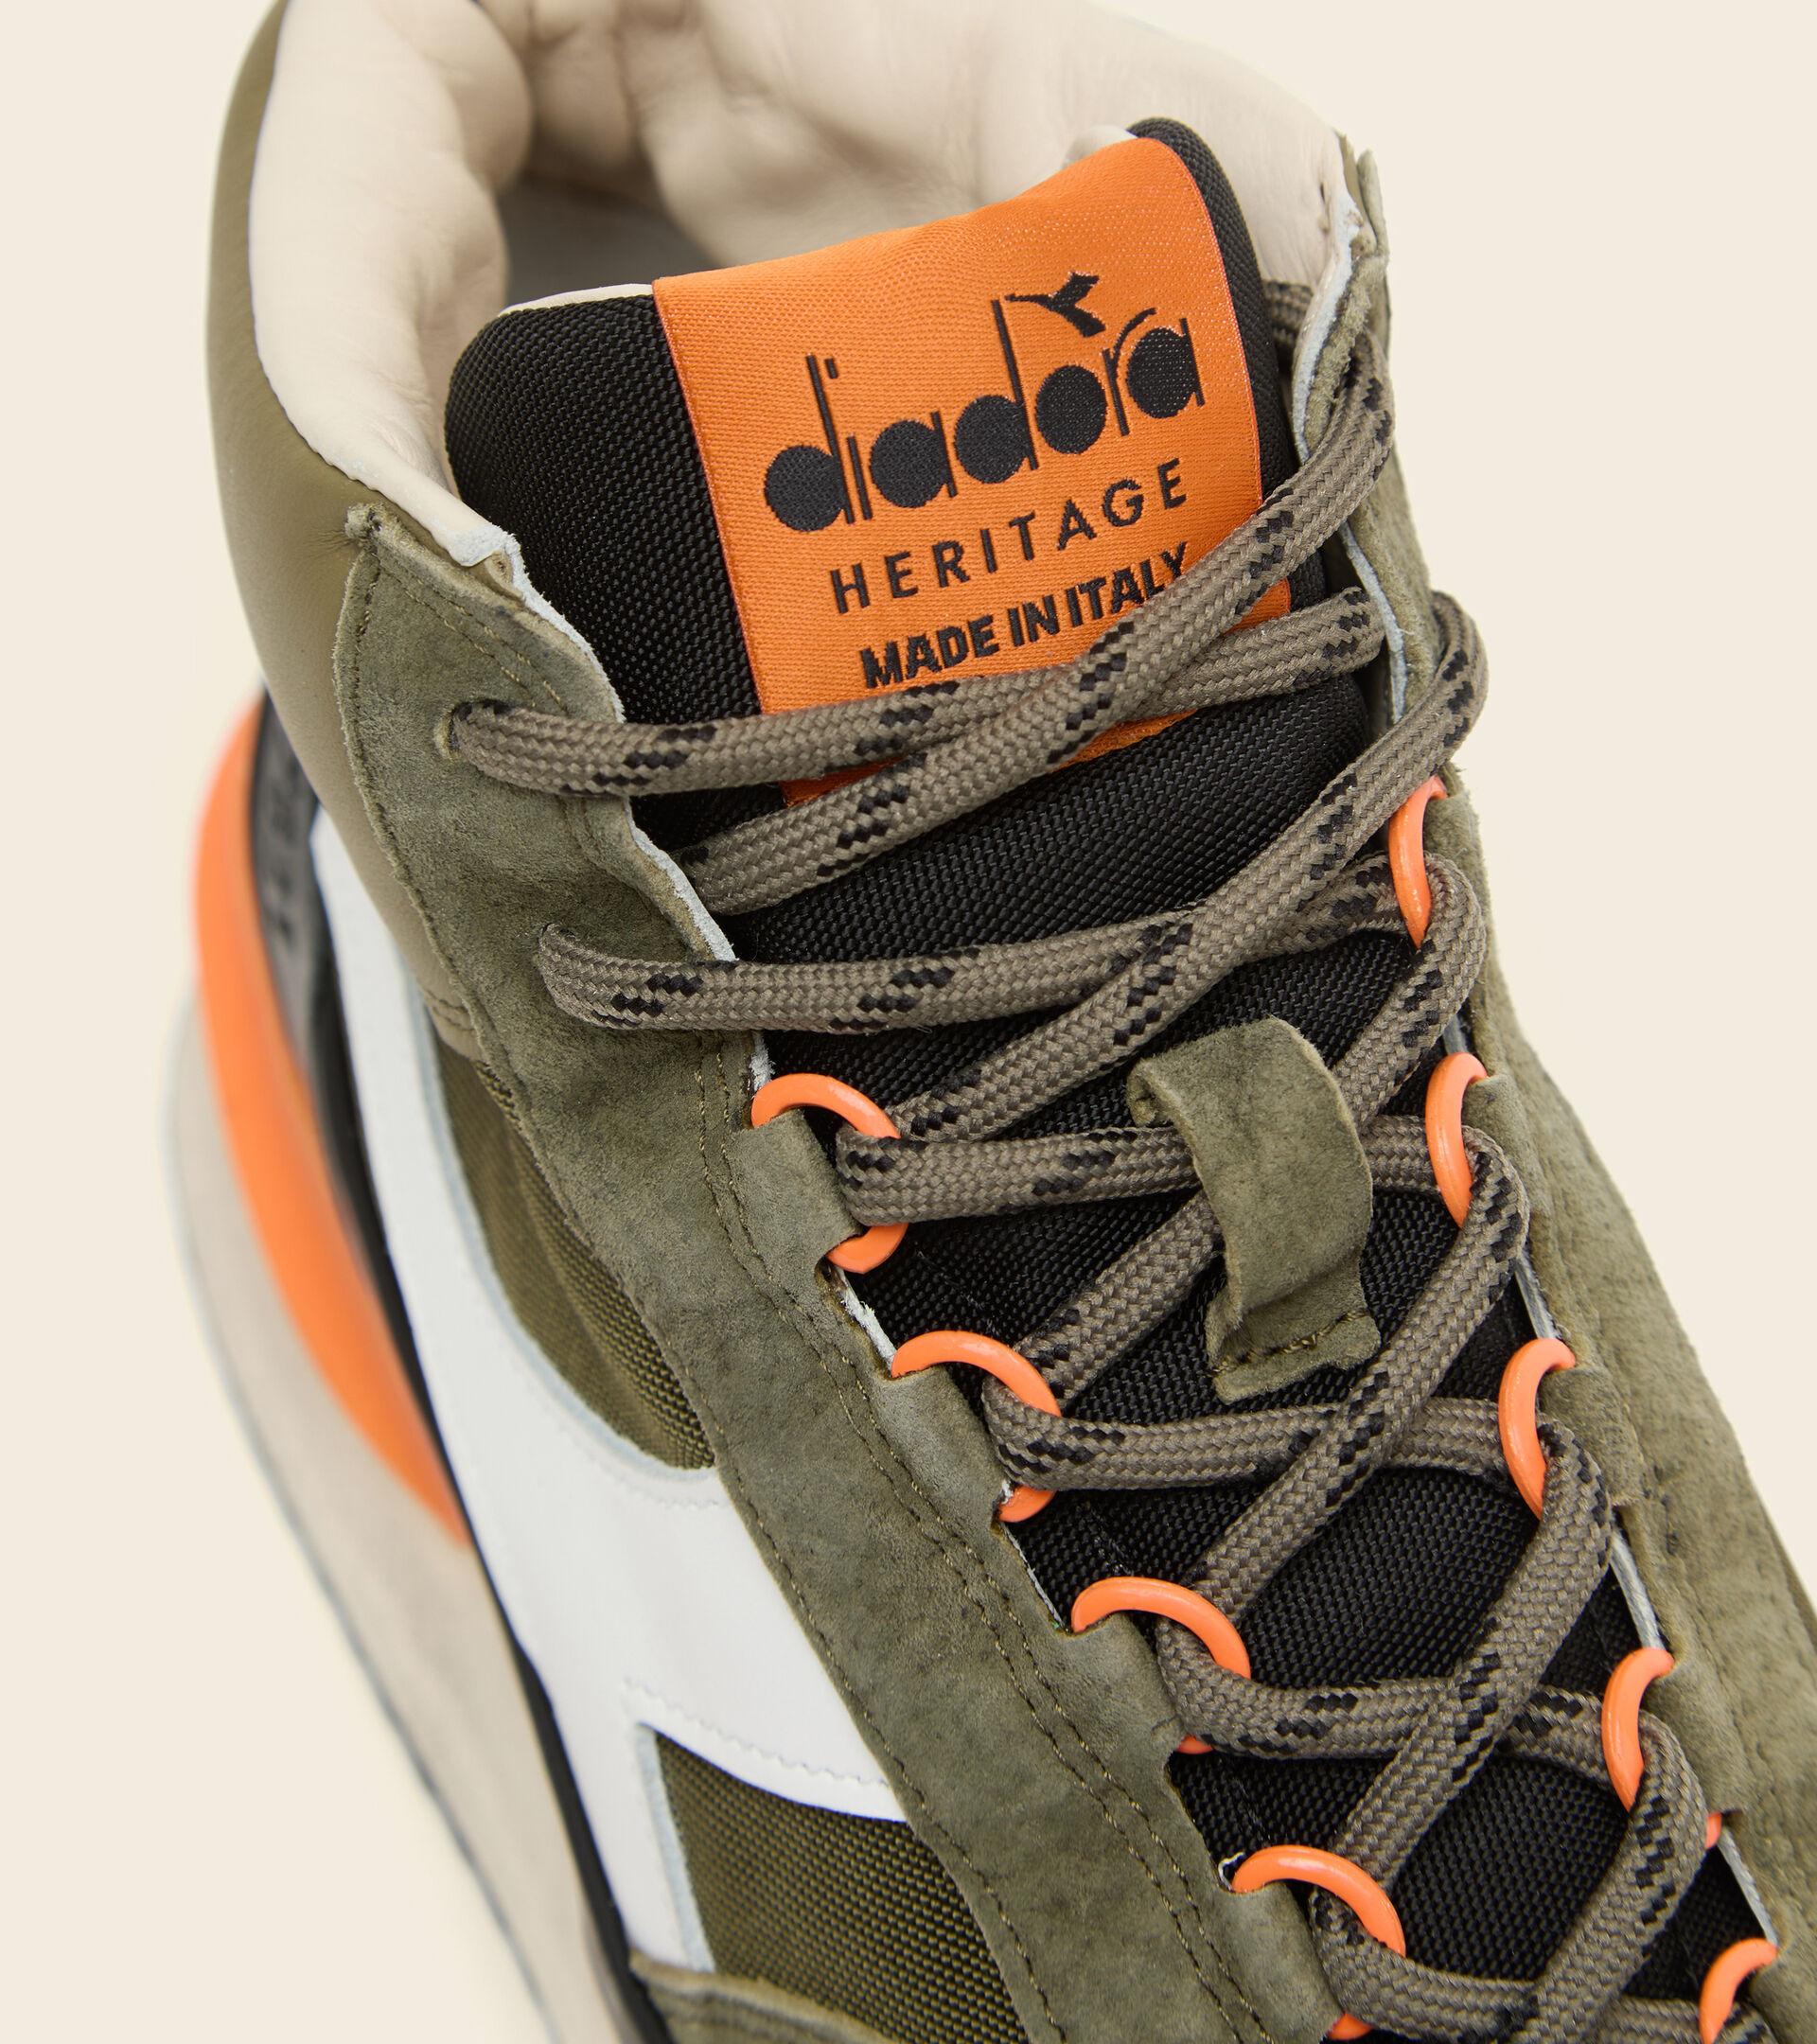 Heritage-Schuh Made in Italy - Herren EQUIPE MID MAD ITALIA NUBUCK SW OLIVIN - Diadora